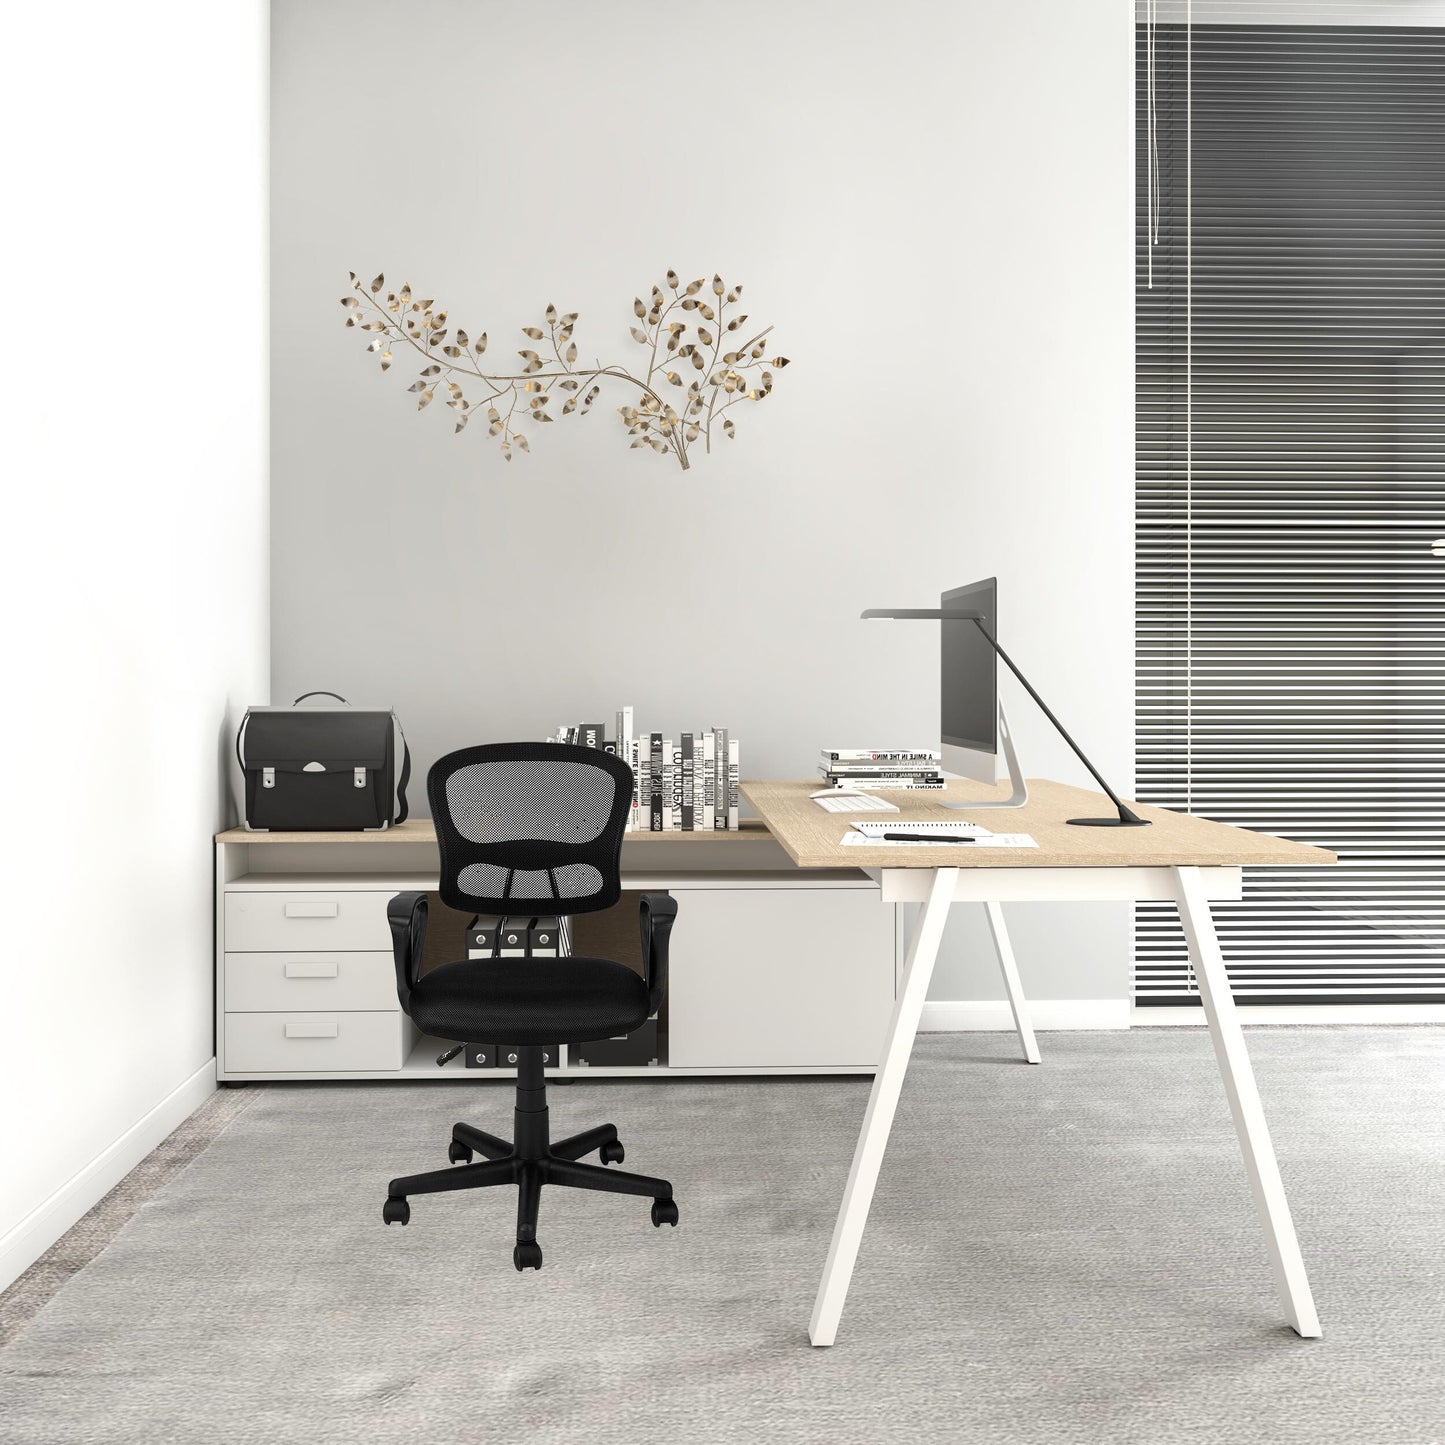 21.5" X 23" X 33" Black Foam Metal Polypropylene Polyester  Office Chair